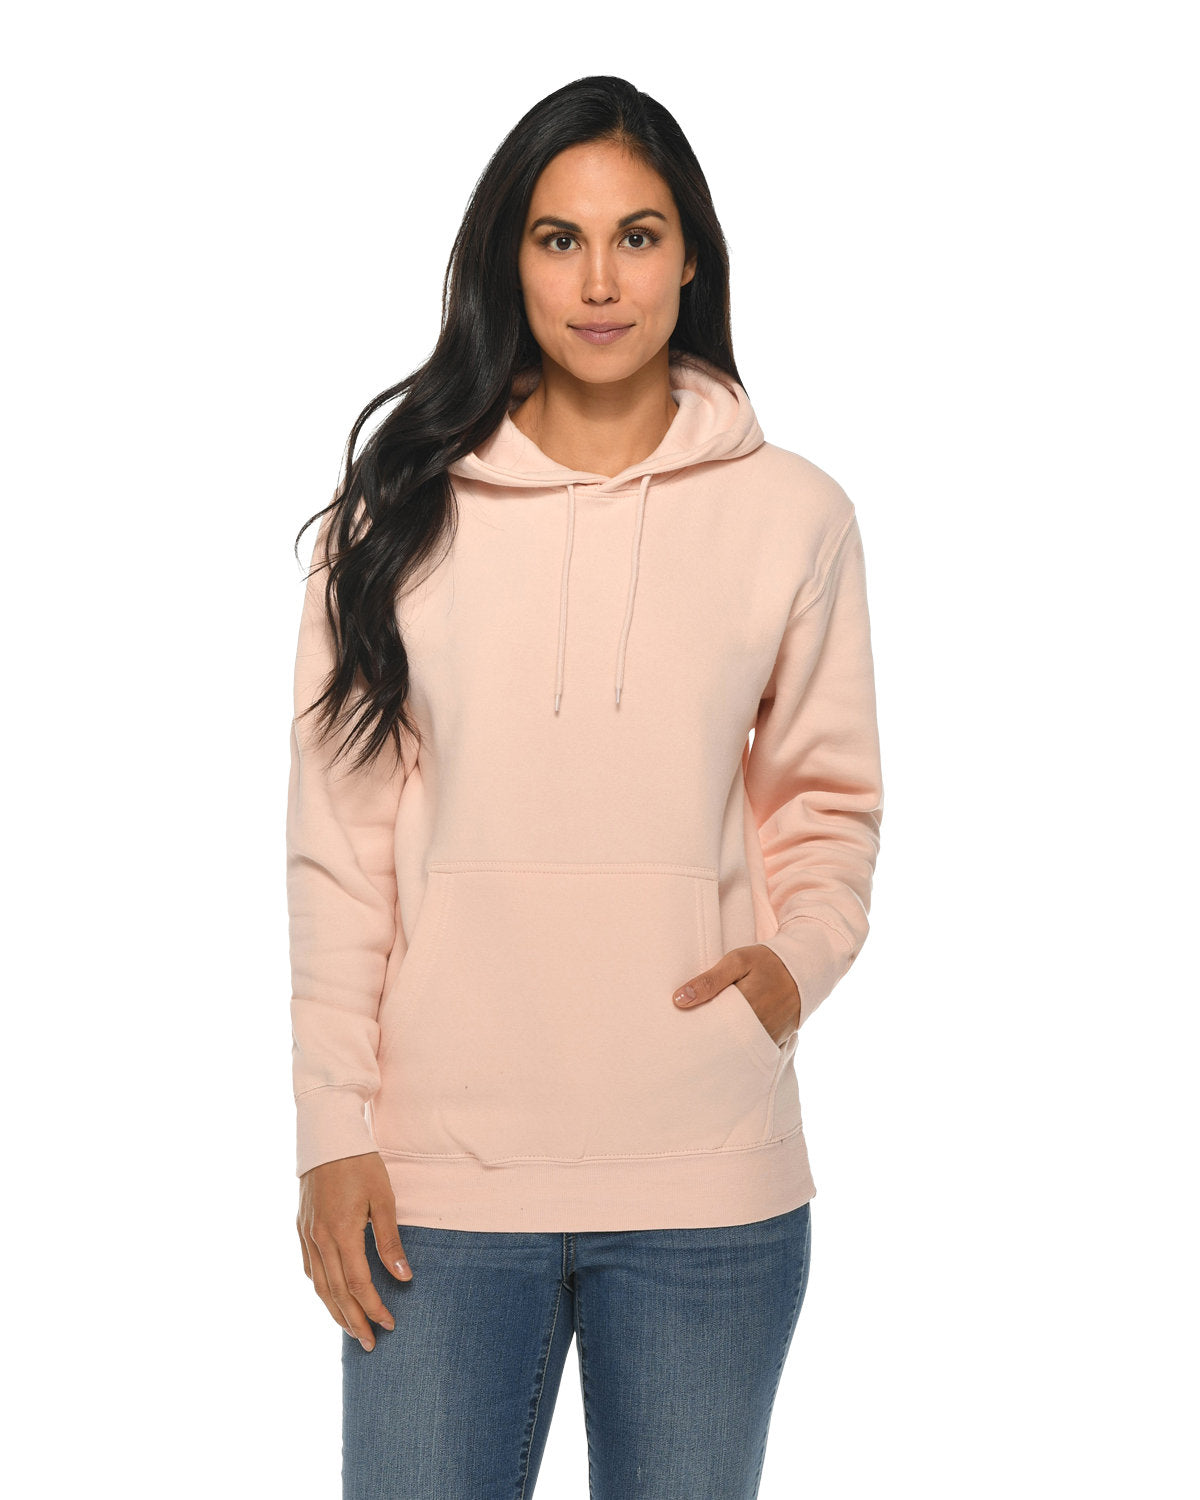 LS14001 Lane Seven Unisex Premium Pullover Hooded Sweatshirt